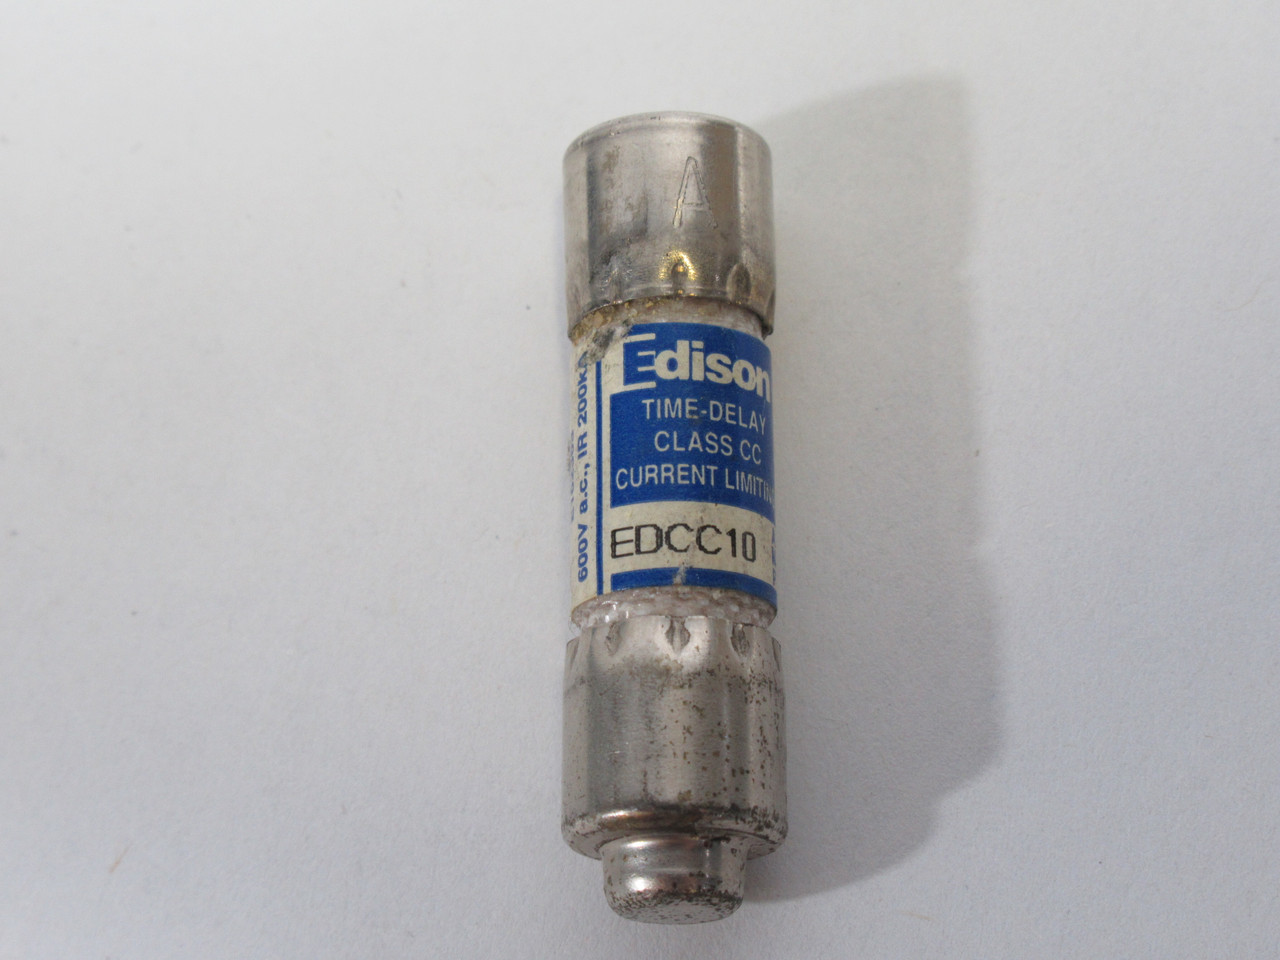 Edison EDCC10 Time Delay Fuse 10A 600V Lot of 10 USED